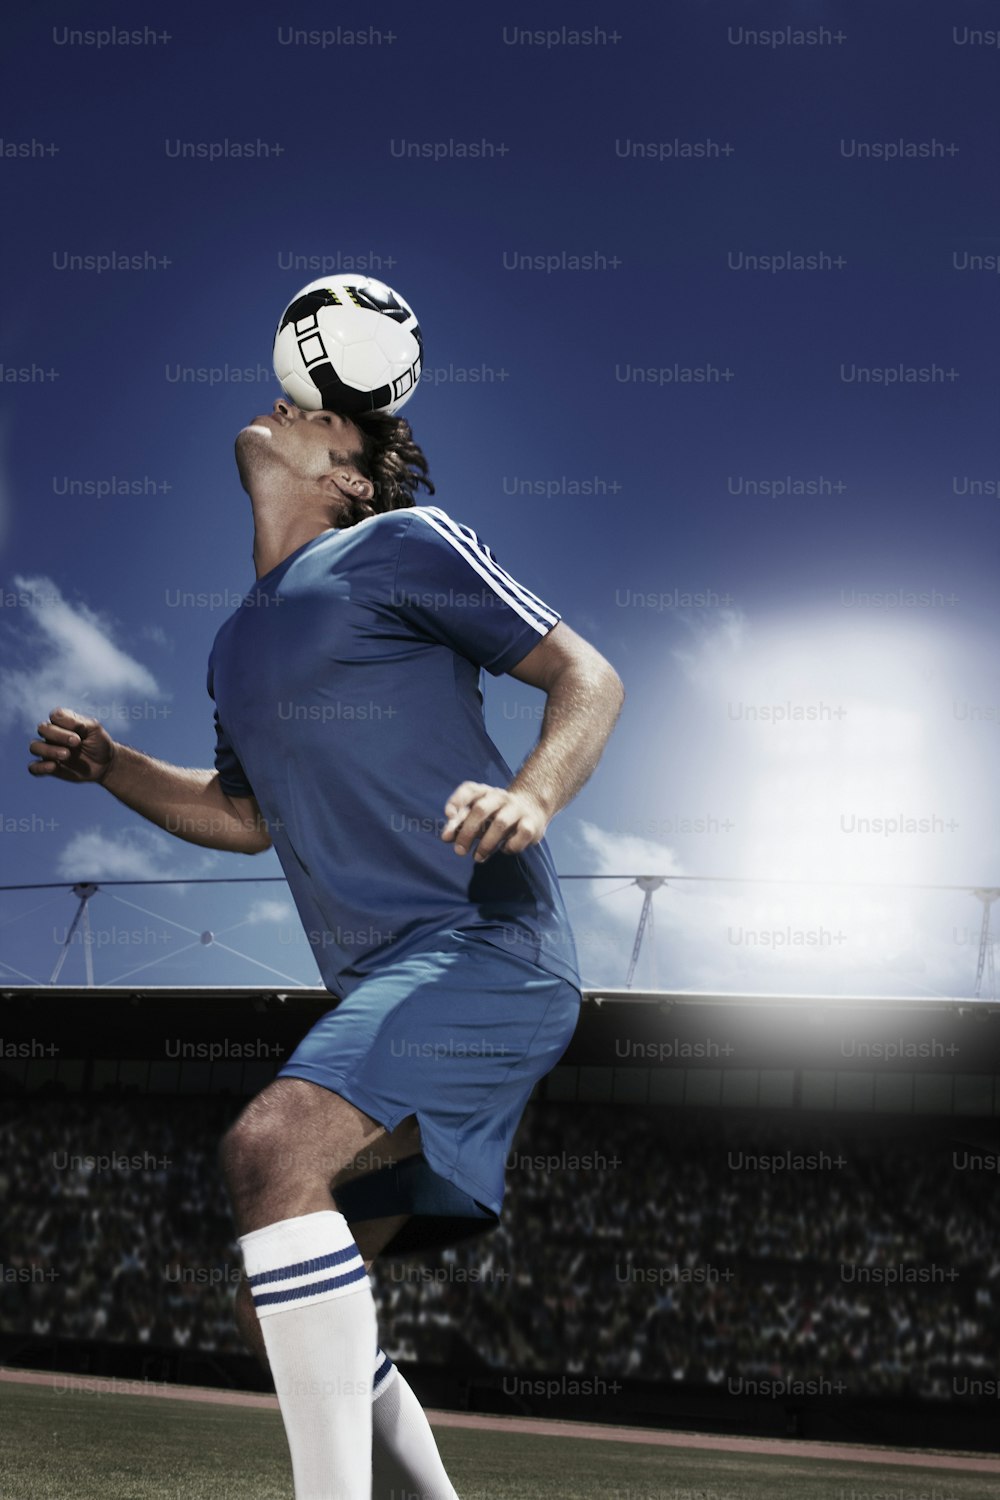 a man in a soccer uniform kicking a soccer ball